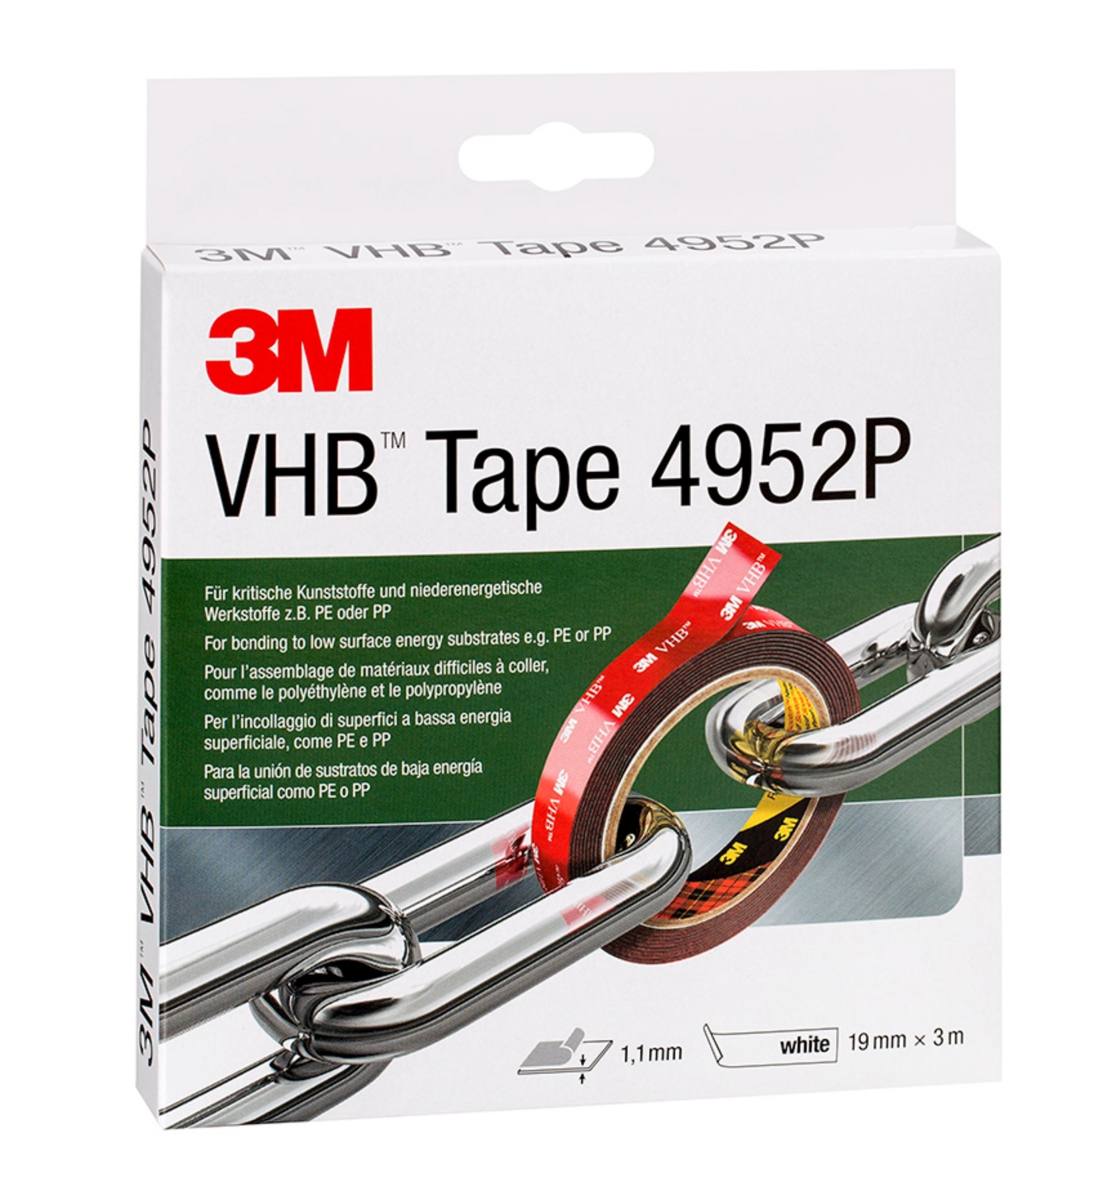 3M VHB kleefband 4952P, wit, 19 mm x 3 m, 1,1 mm